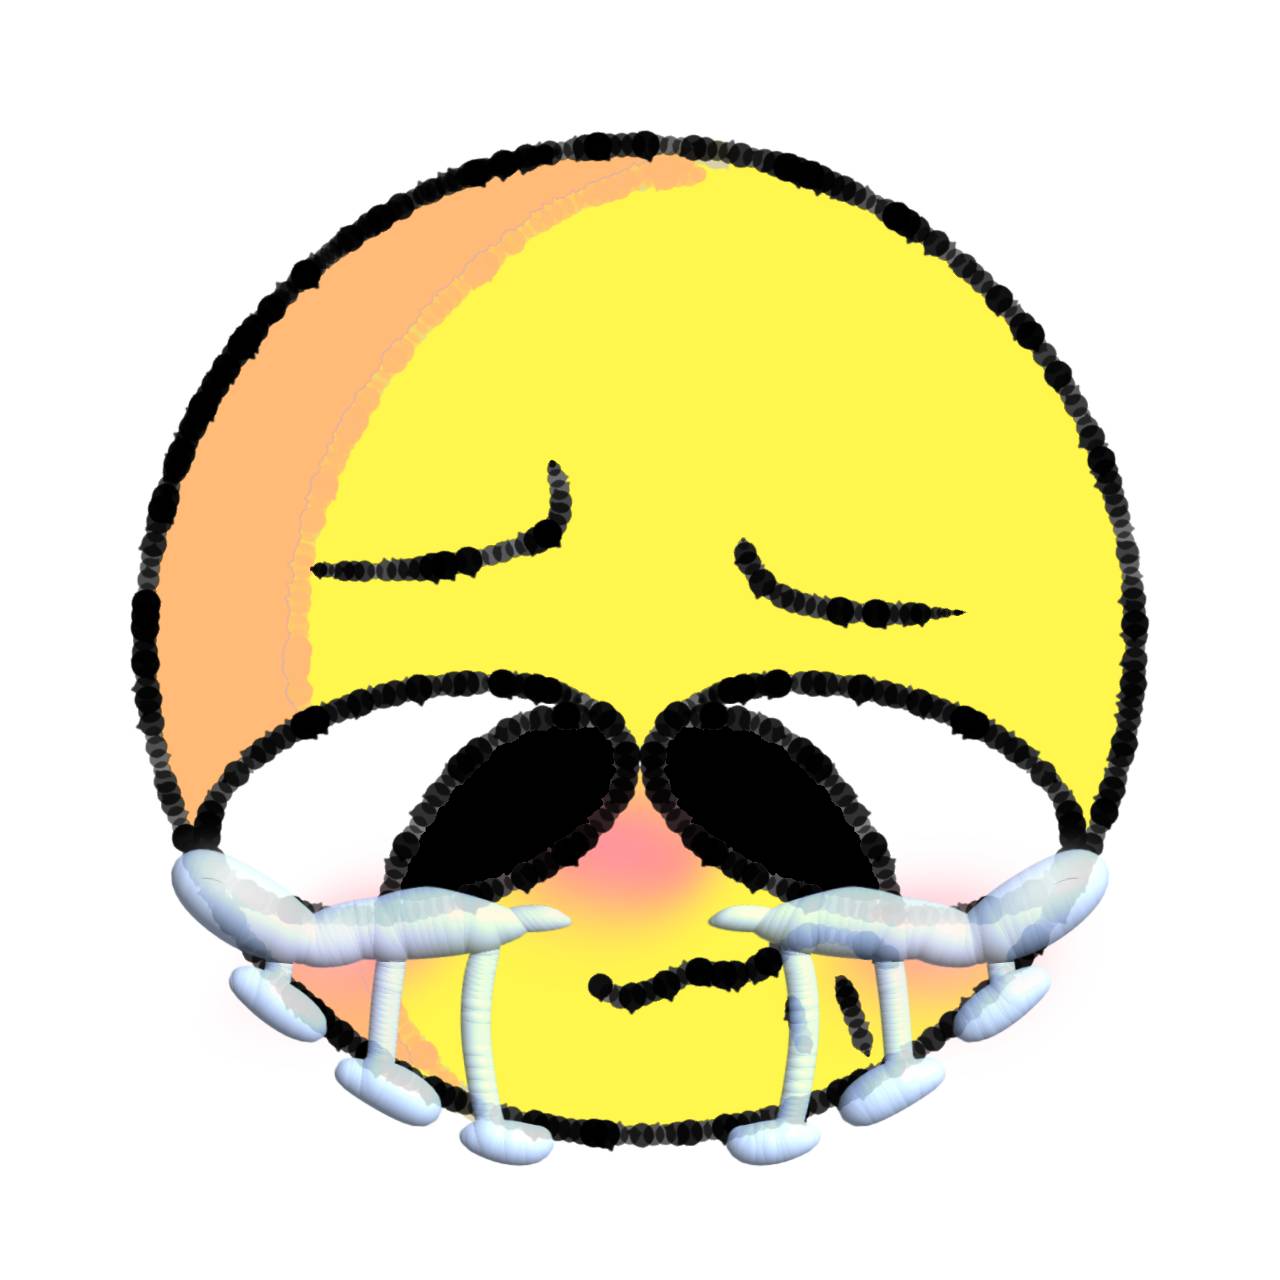 Cursed Emoji Baby Crying by SmolKyle139 on DeviantArt